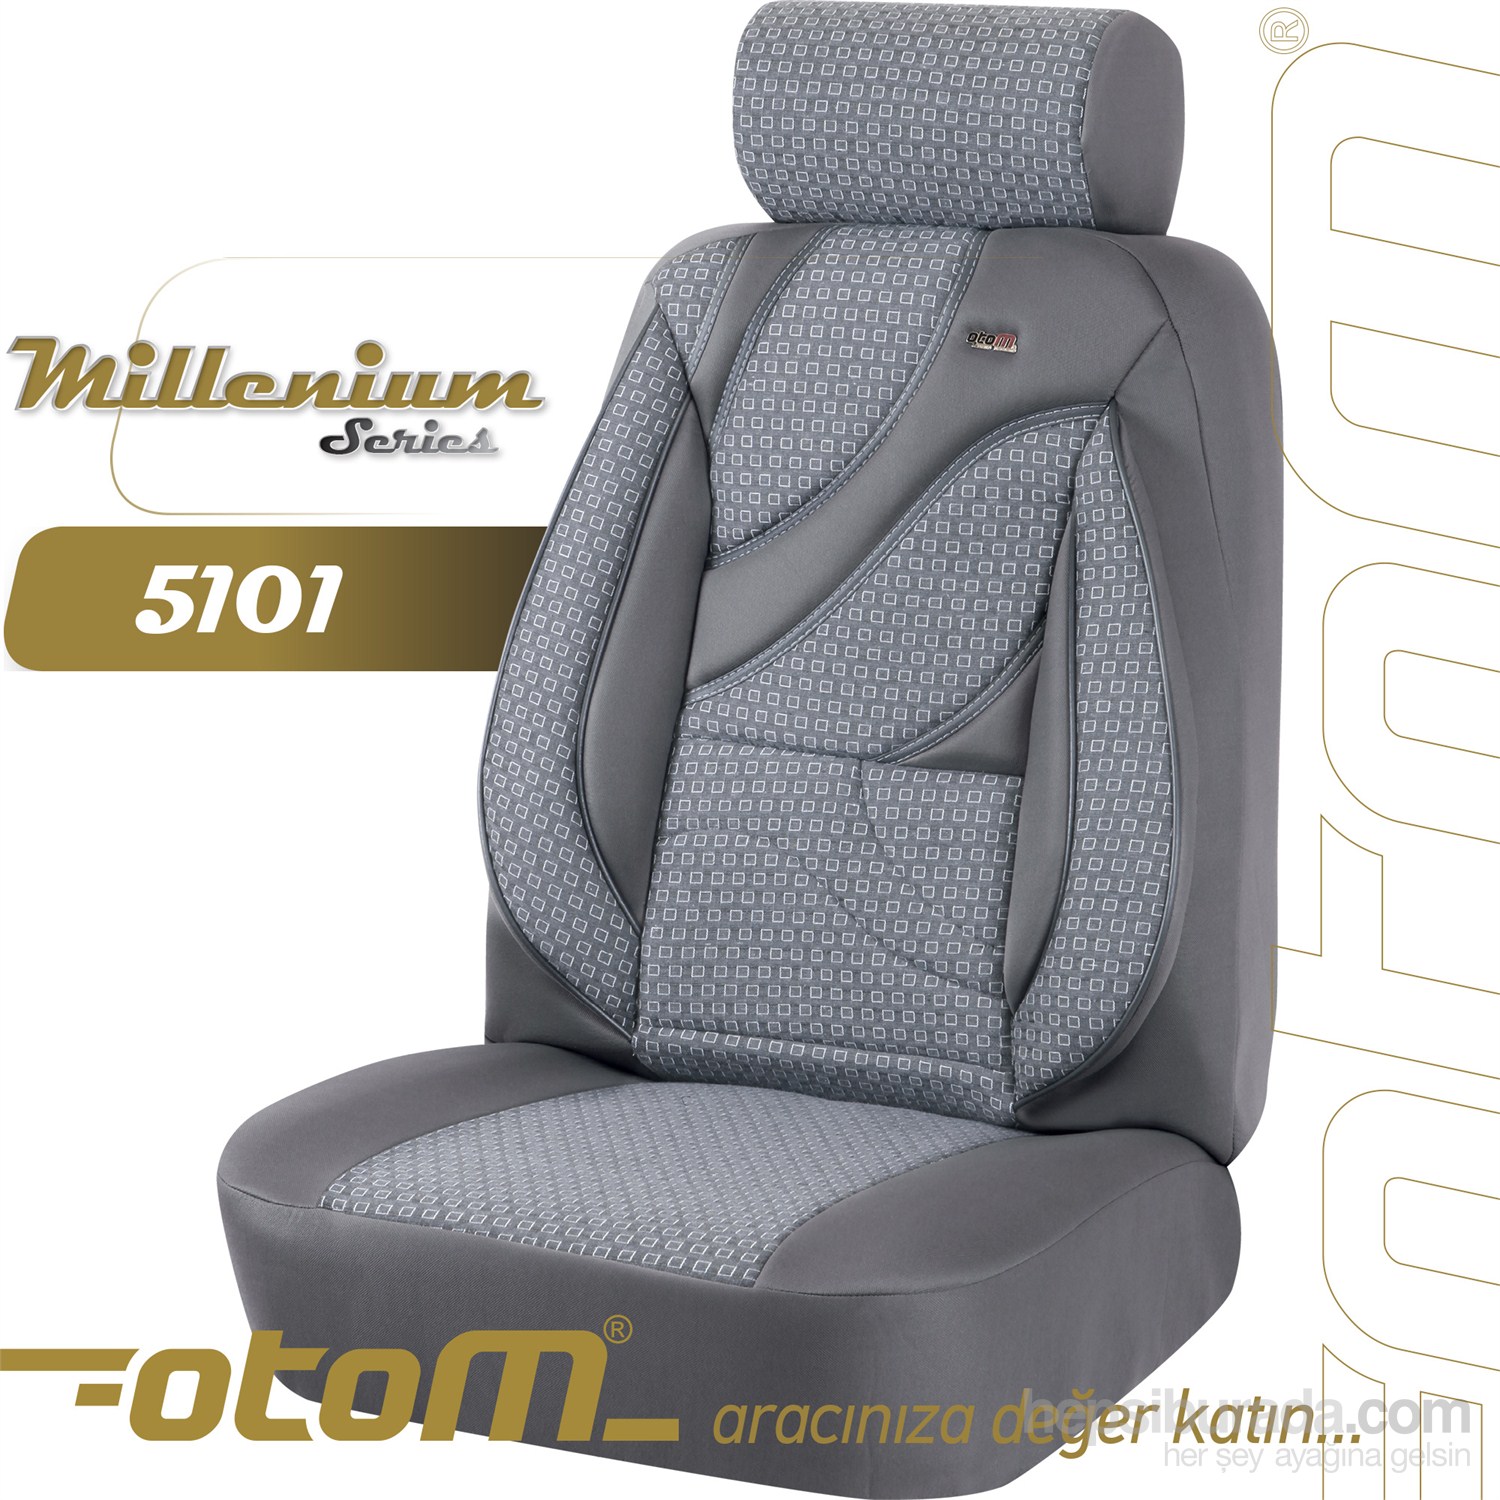 Otom Milenium Standart Oto Koltuk Kılıfı Mln5101 Fiyatı